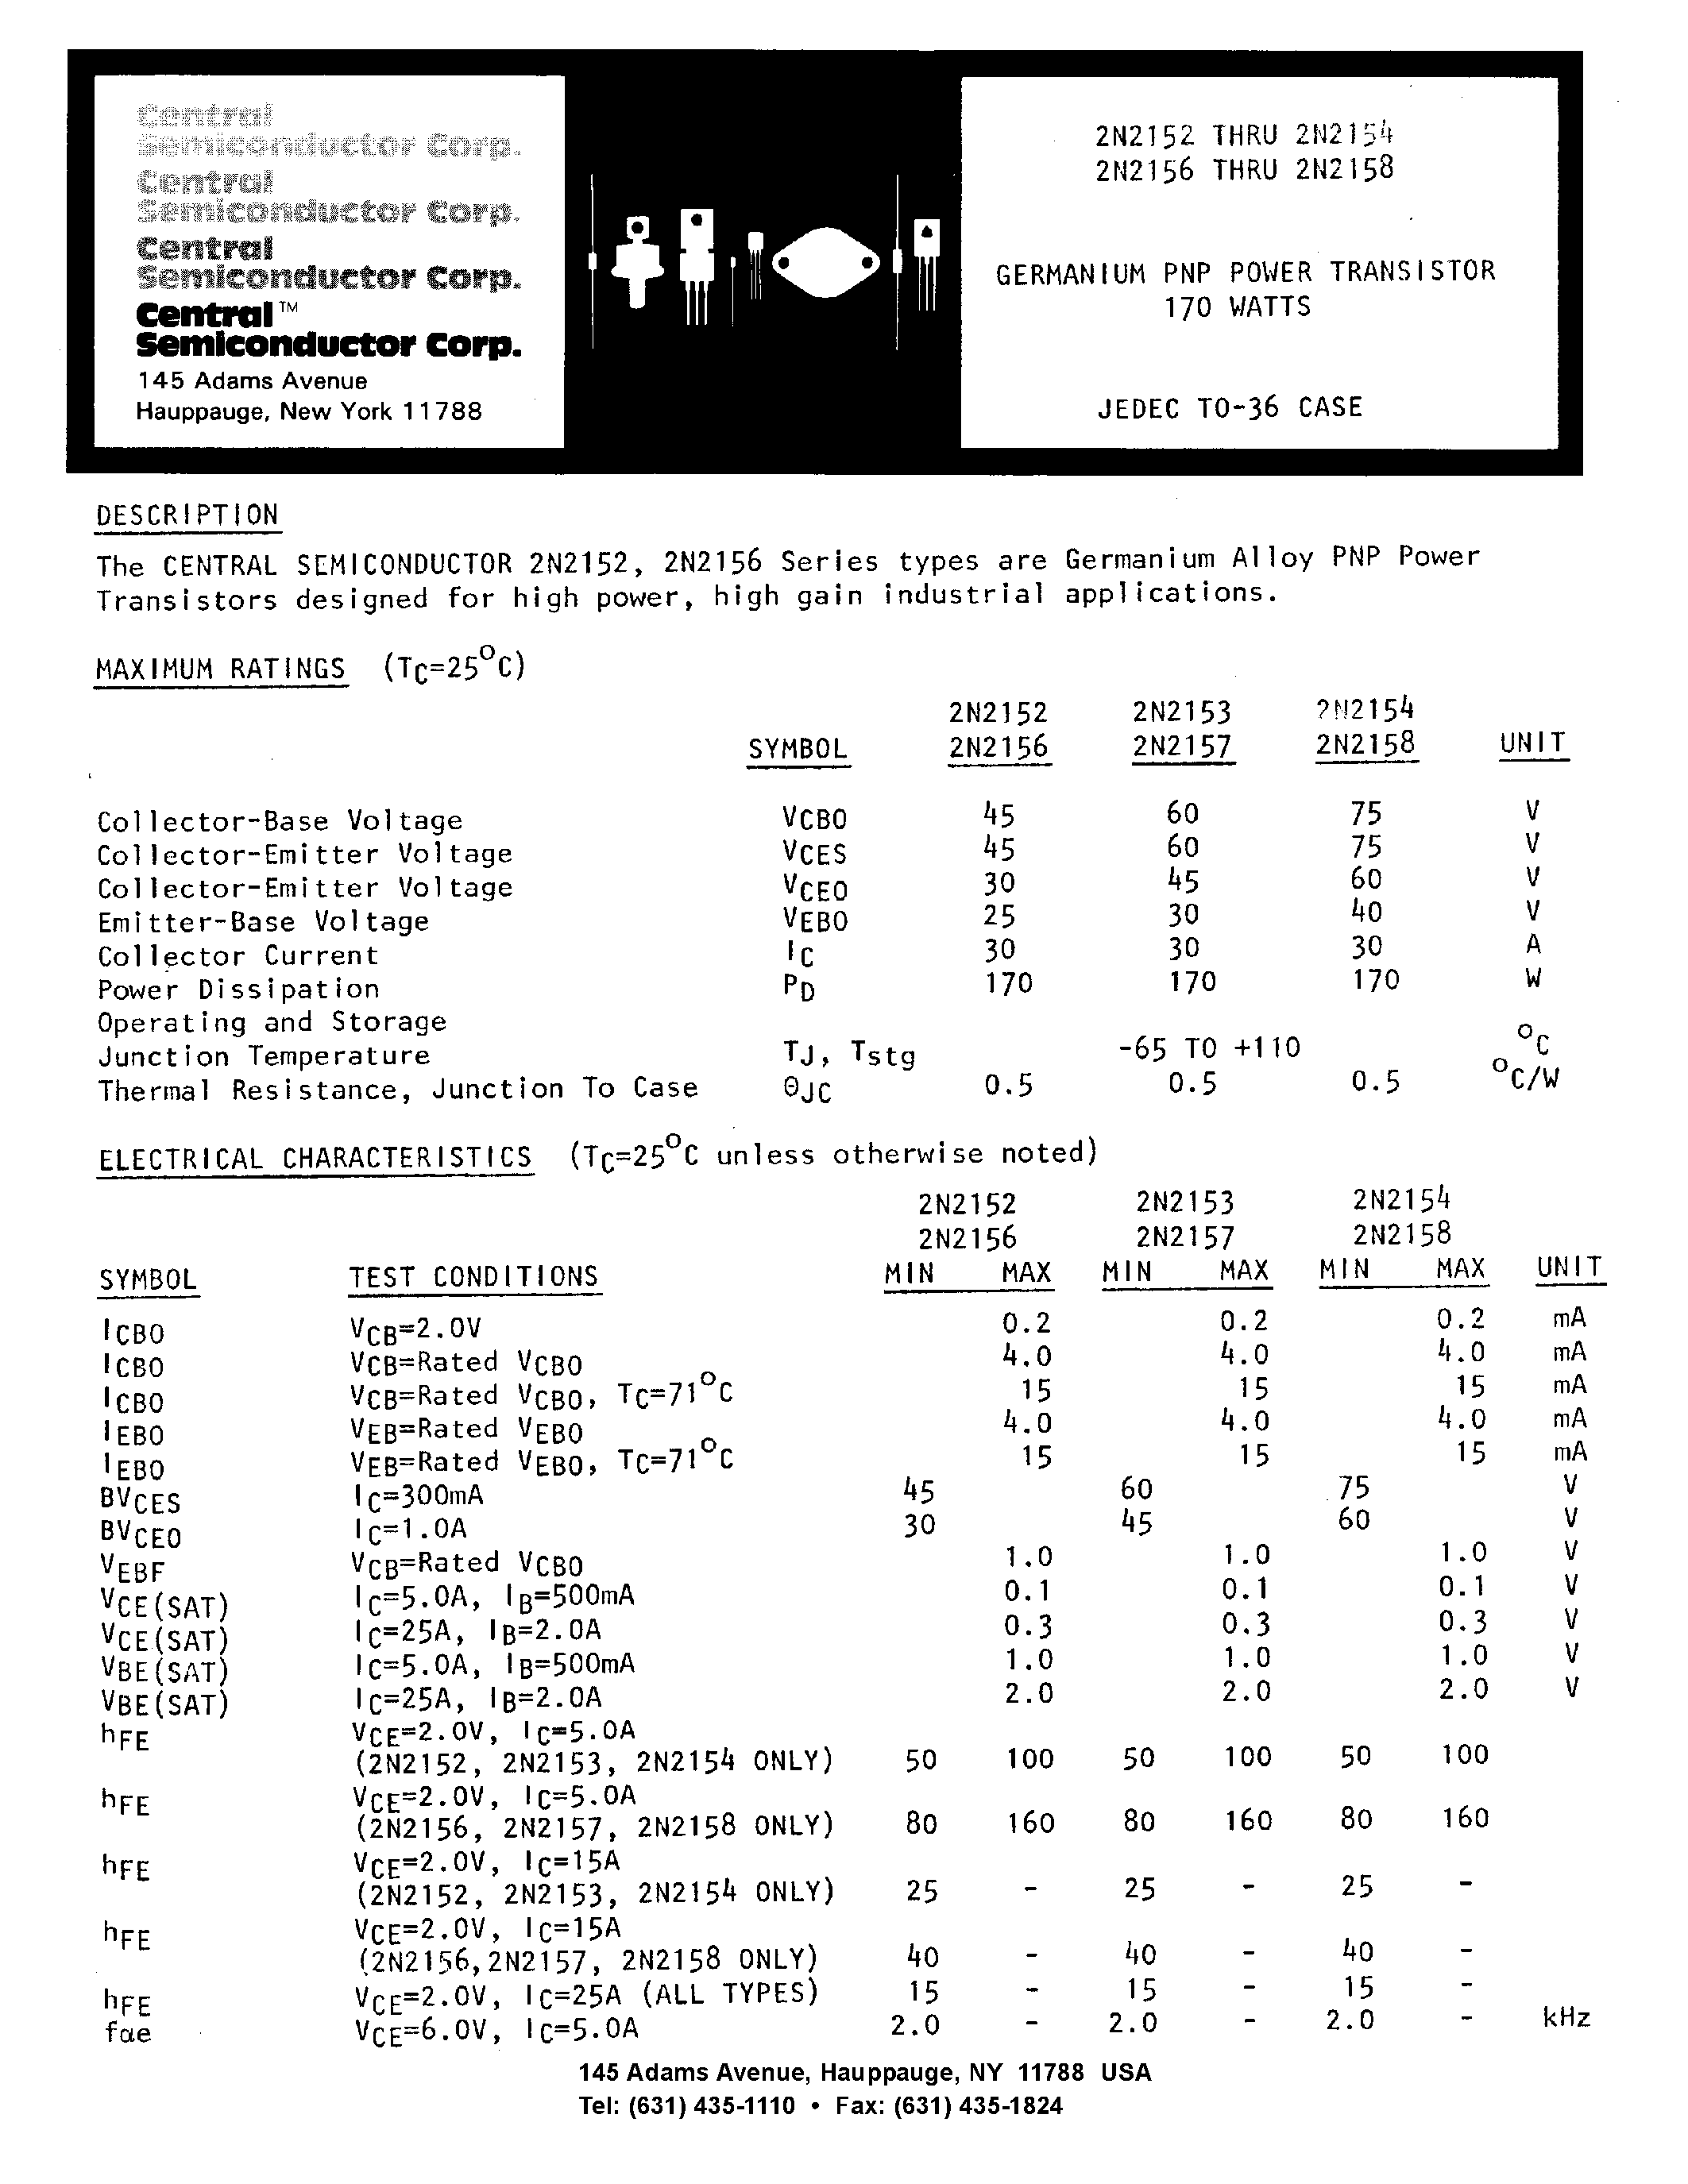 Datasheet 2N2152 - (2N2152 - 2N2158) Geranium PNP Power Transistor 170 W page 1